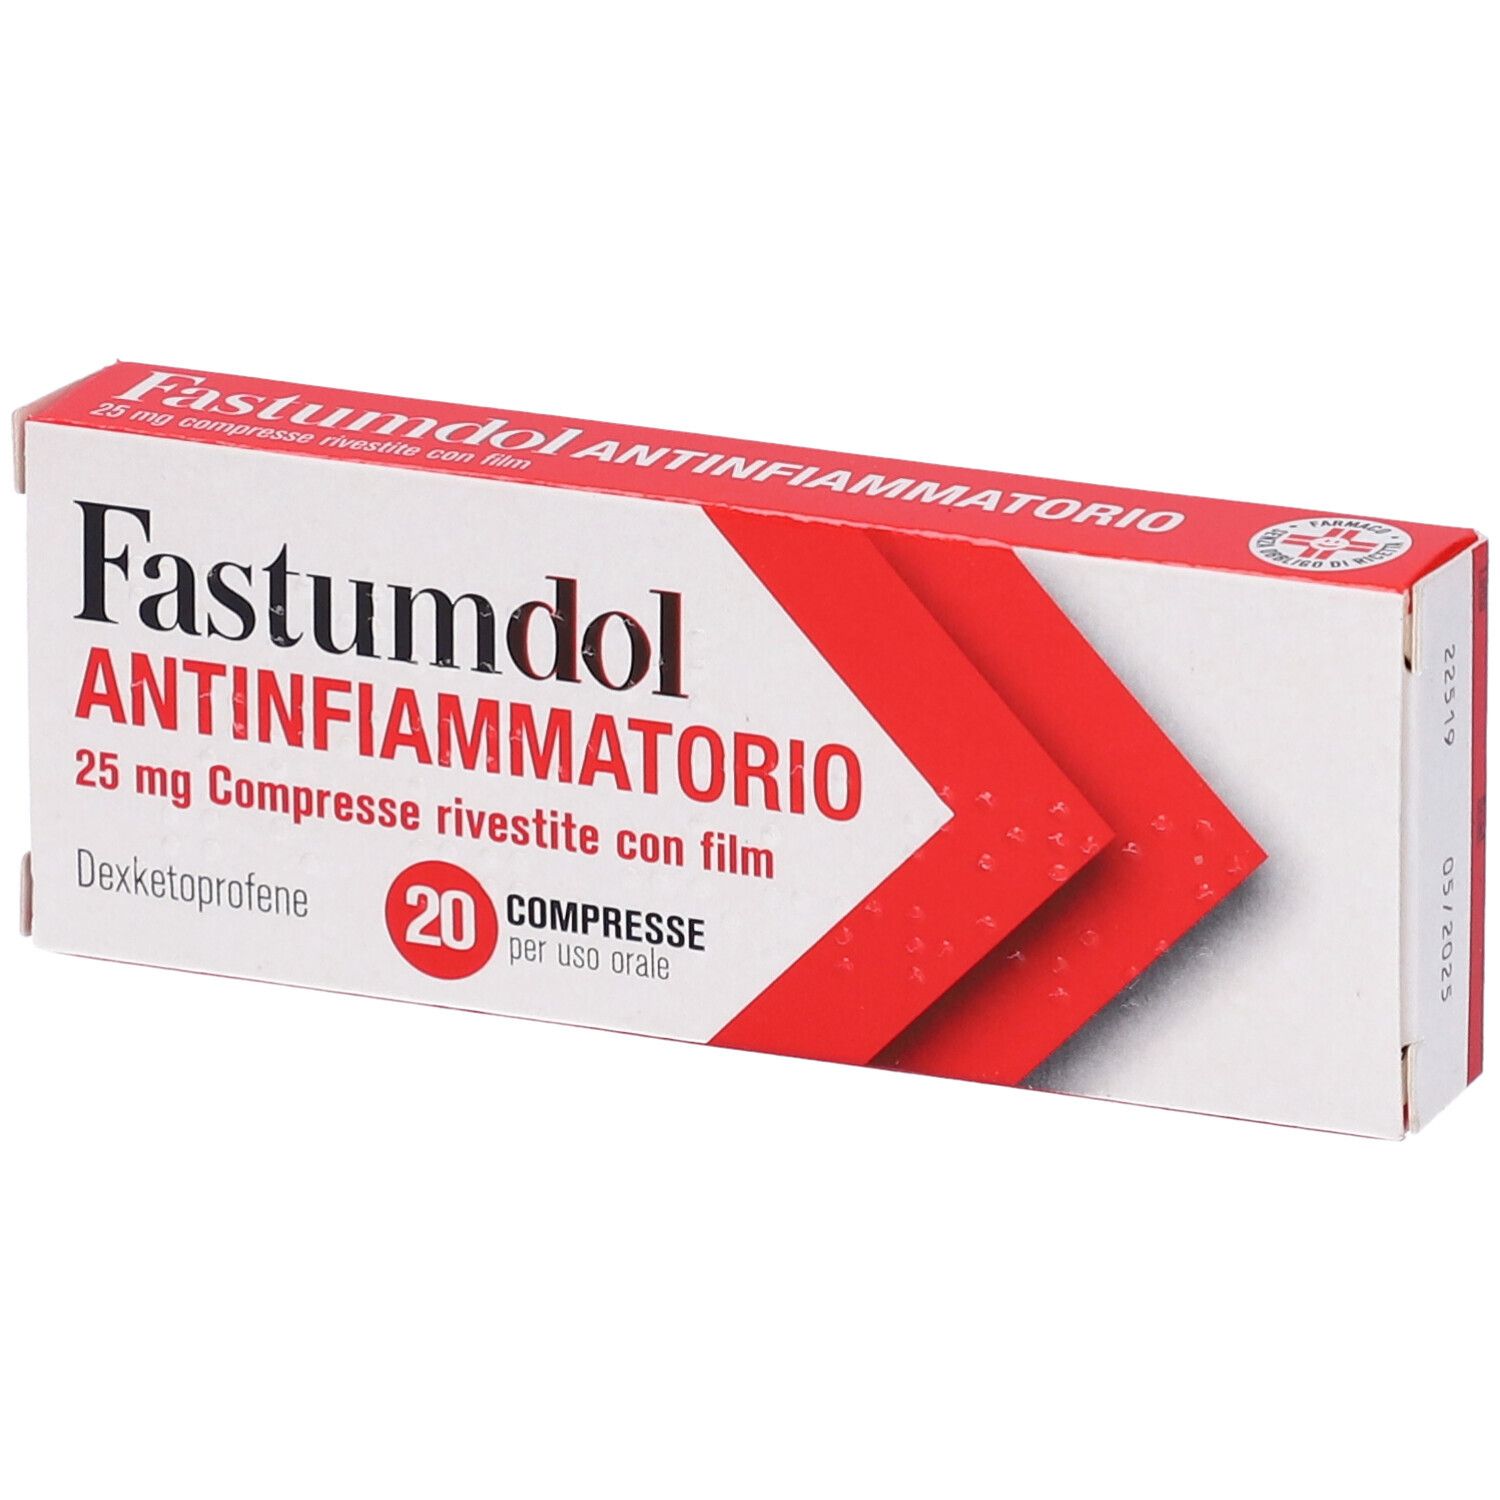 Fastumdol Antinfiammatorio 25 Mg Compresse Rivestite Con Film